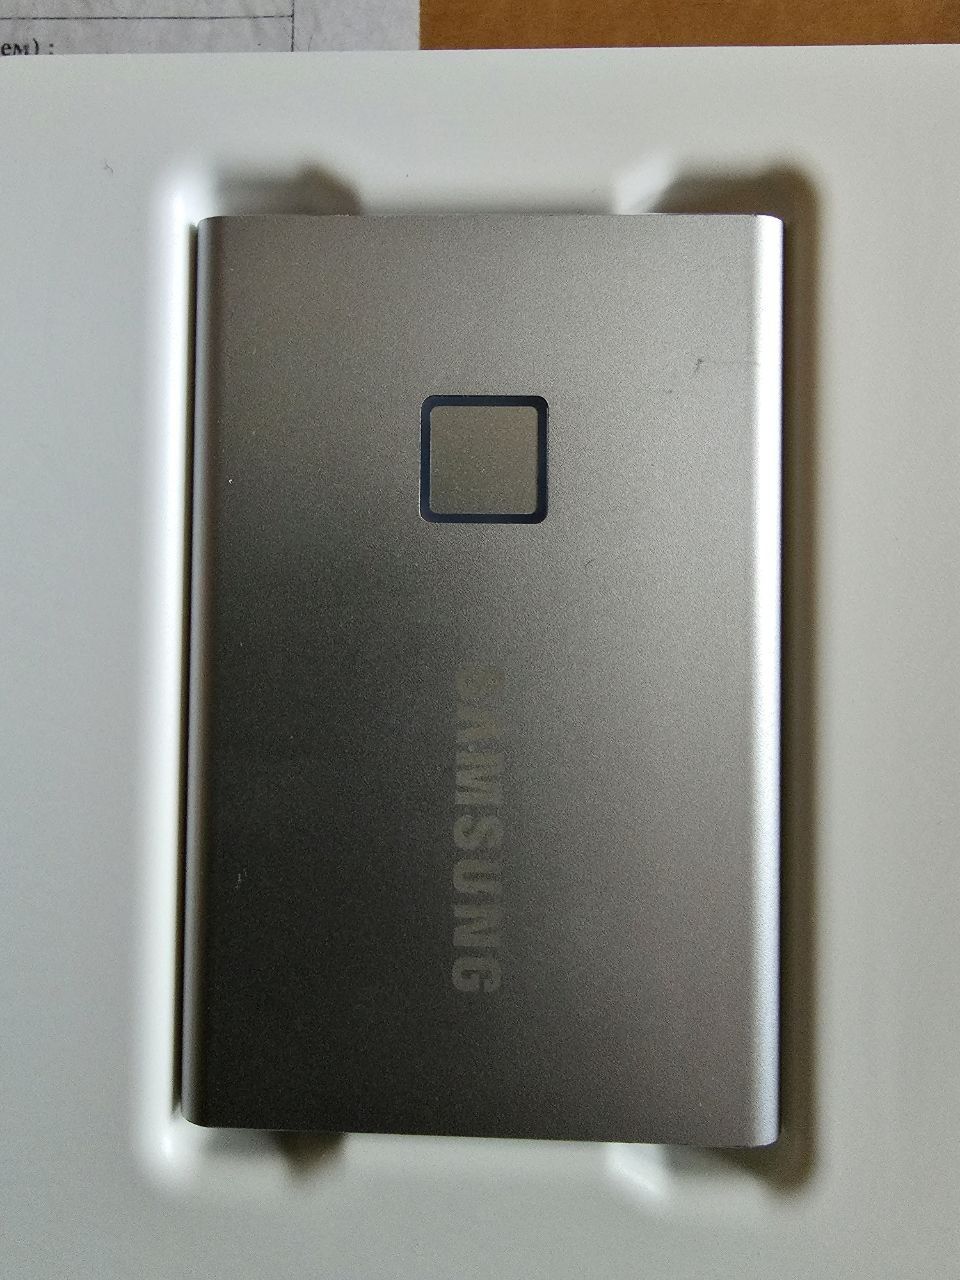 SSD Samsung на 1ТБ с отпечатком пальца